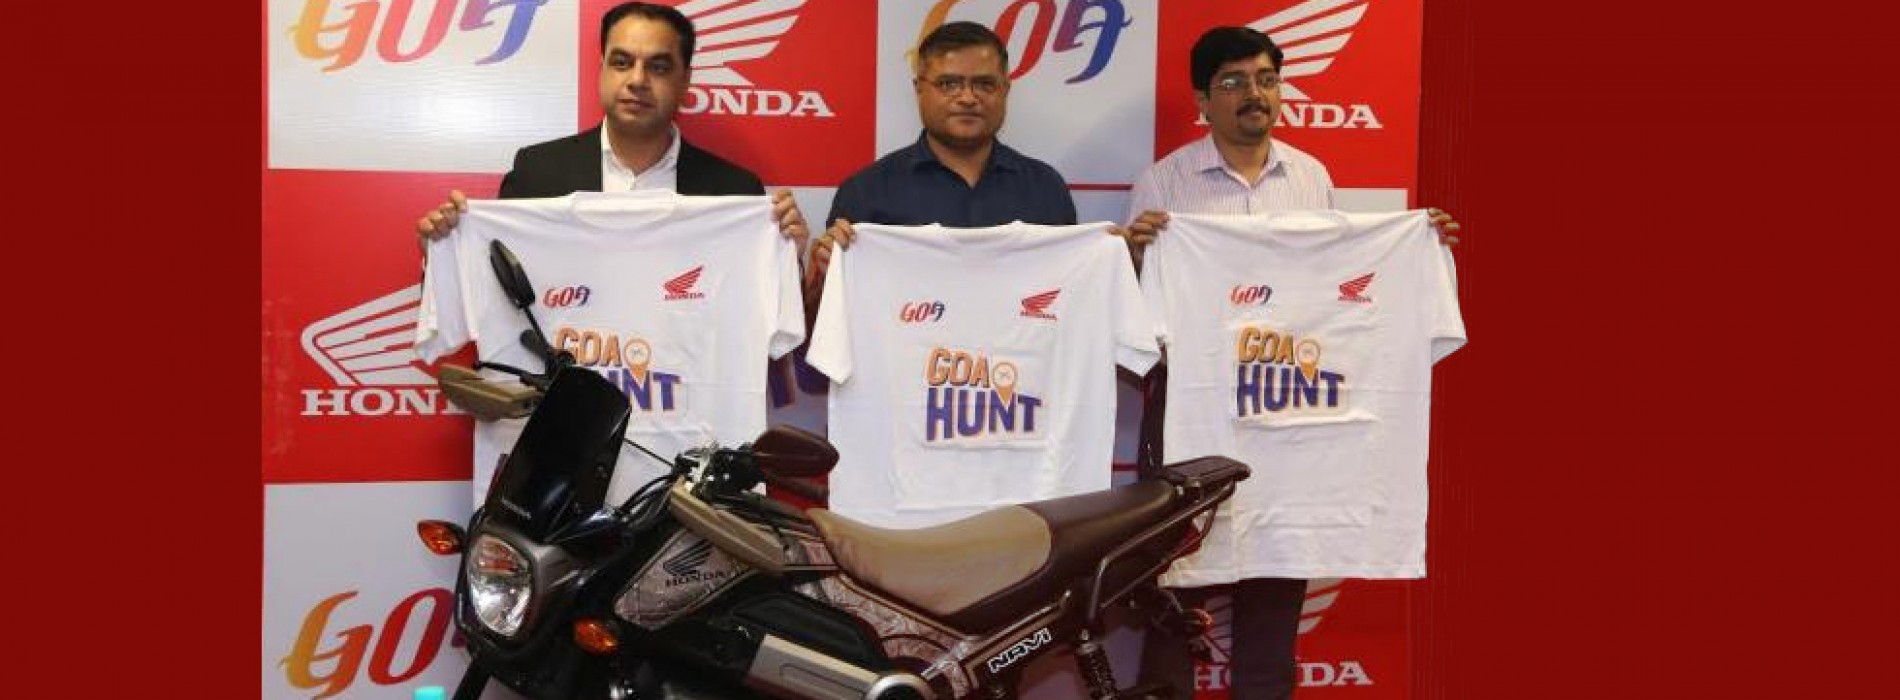 Hon’ble Minister for Tourism, Govt. of Goa, Manohar Azgaonkar flags off GTDC – Honda NAVi Goa Hunt 2017 event